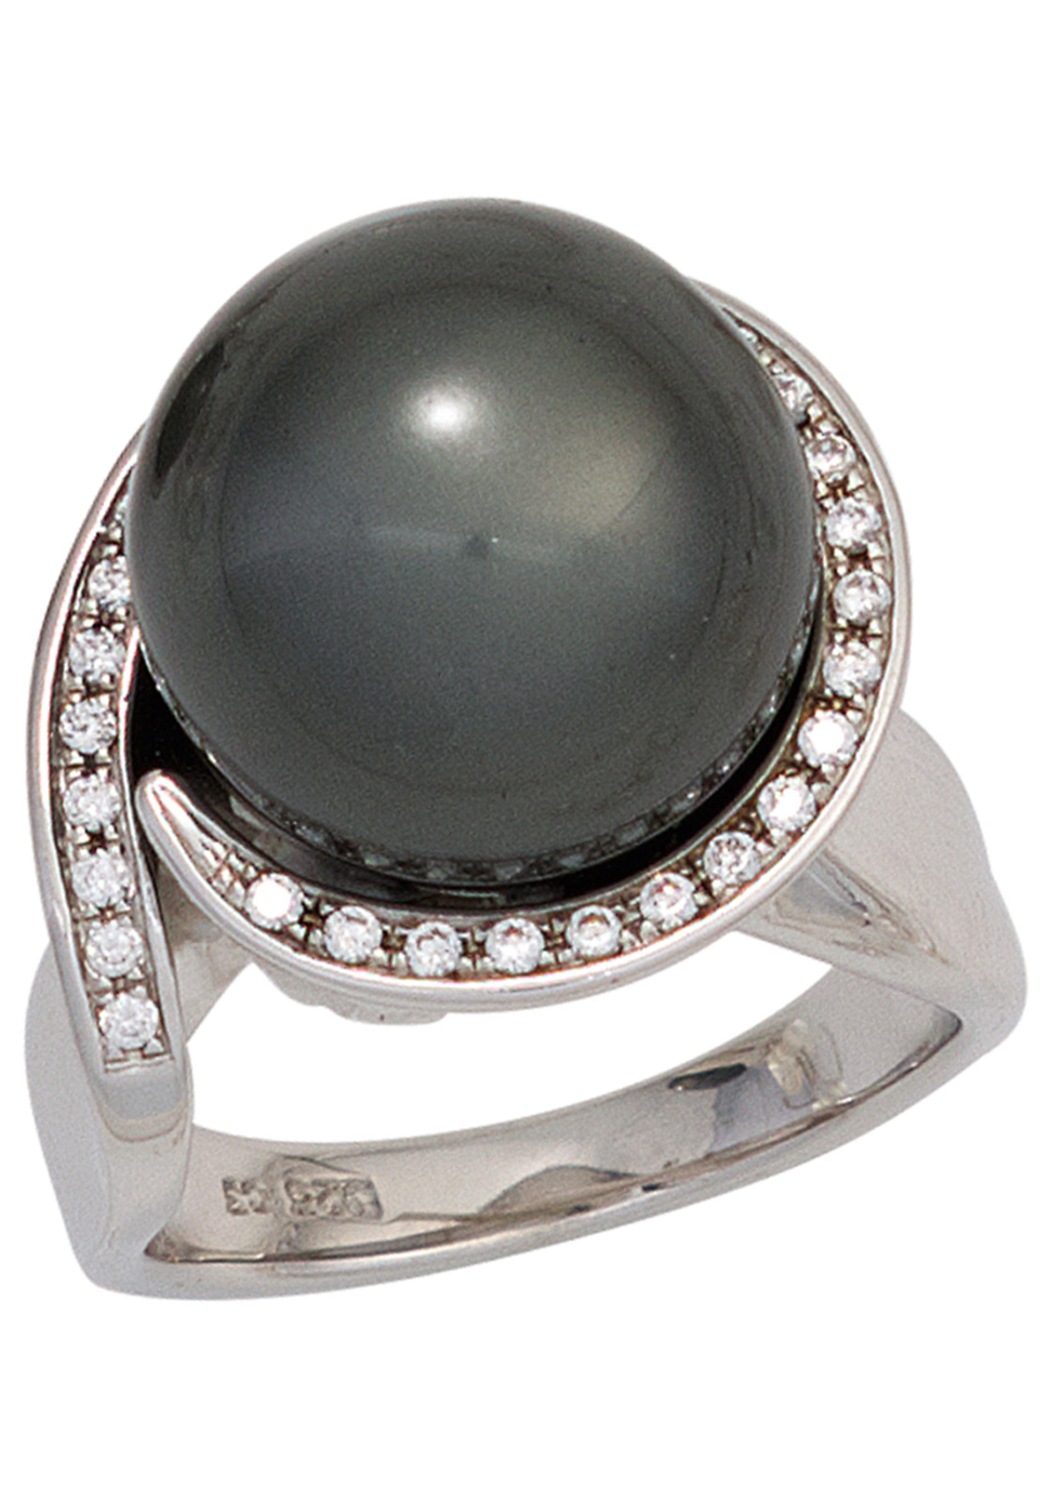 JOBO Perlenring 925 Silber mit synthetischer Perle und Zirkonia | Silberringe